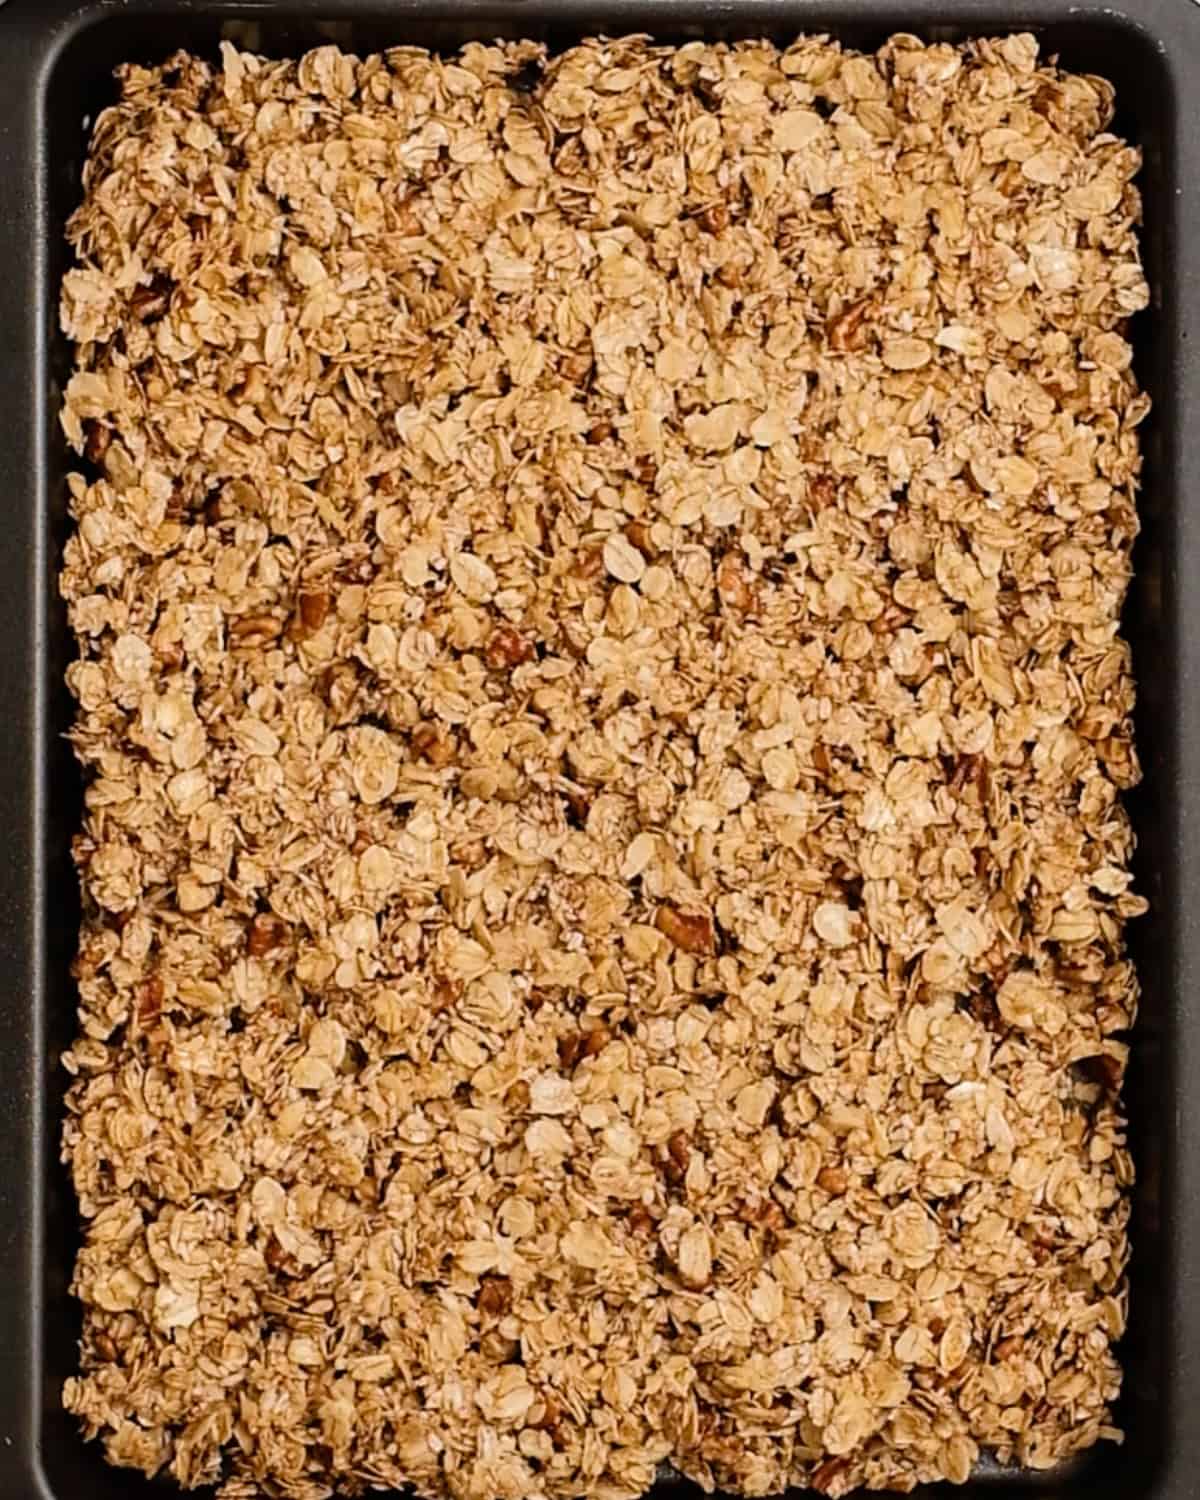 How to Make Homemade Granola - granola on a pan before baking